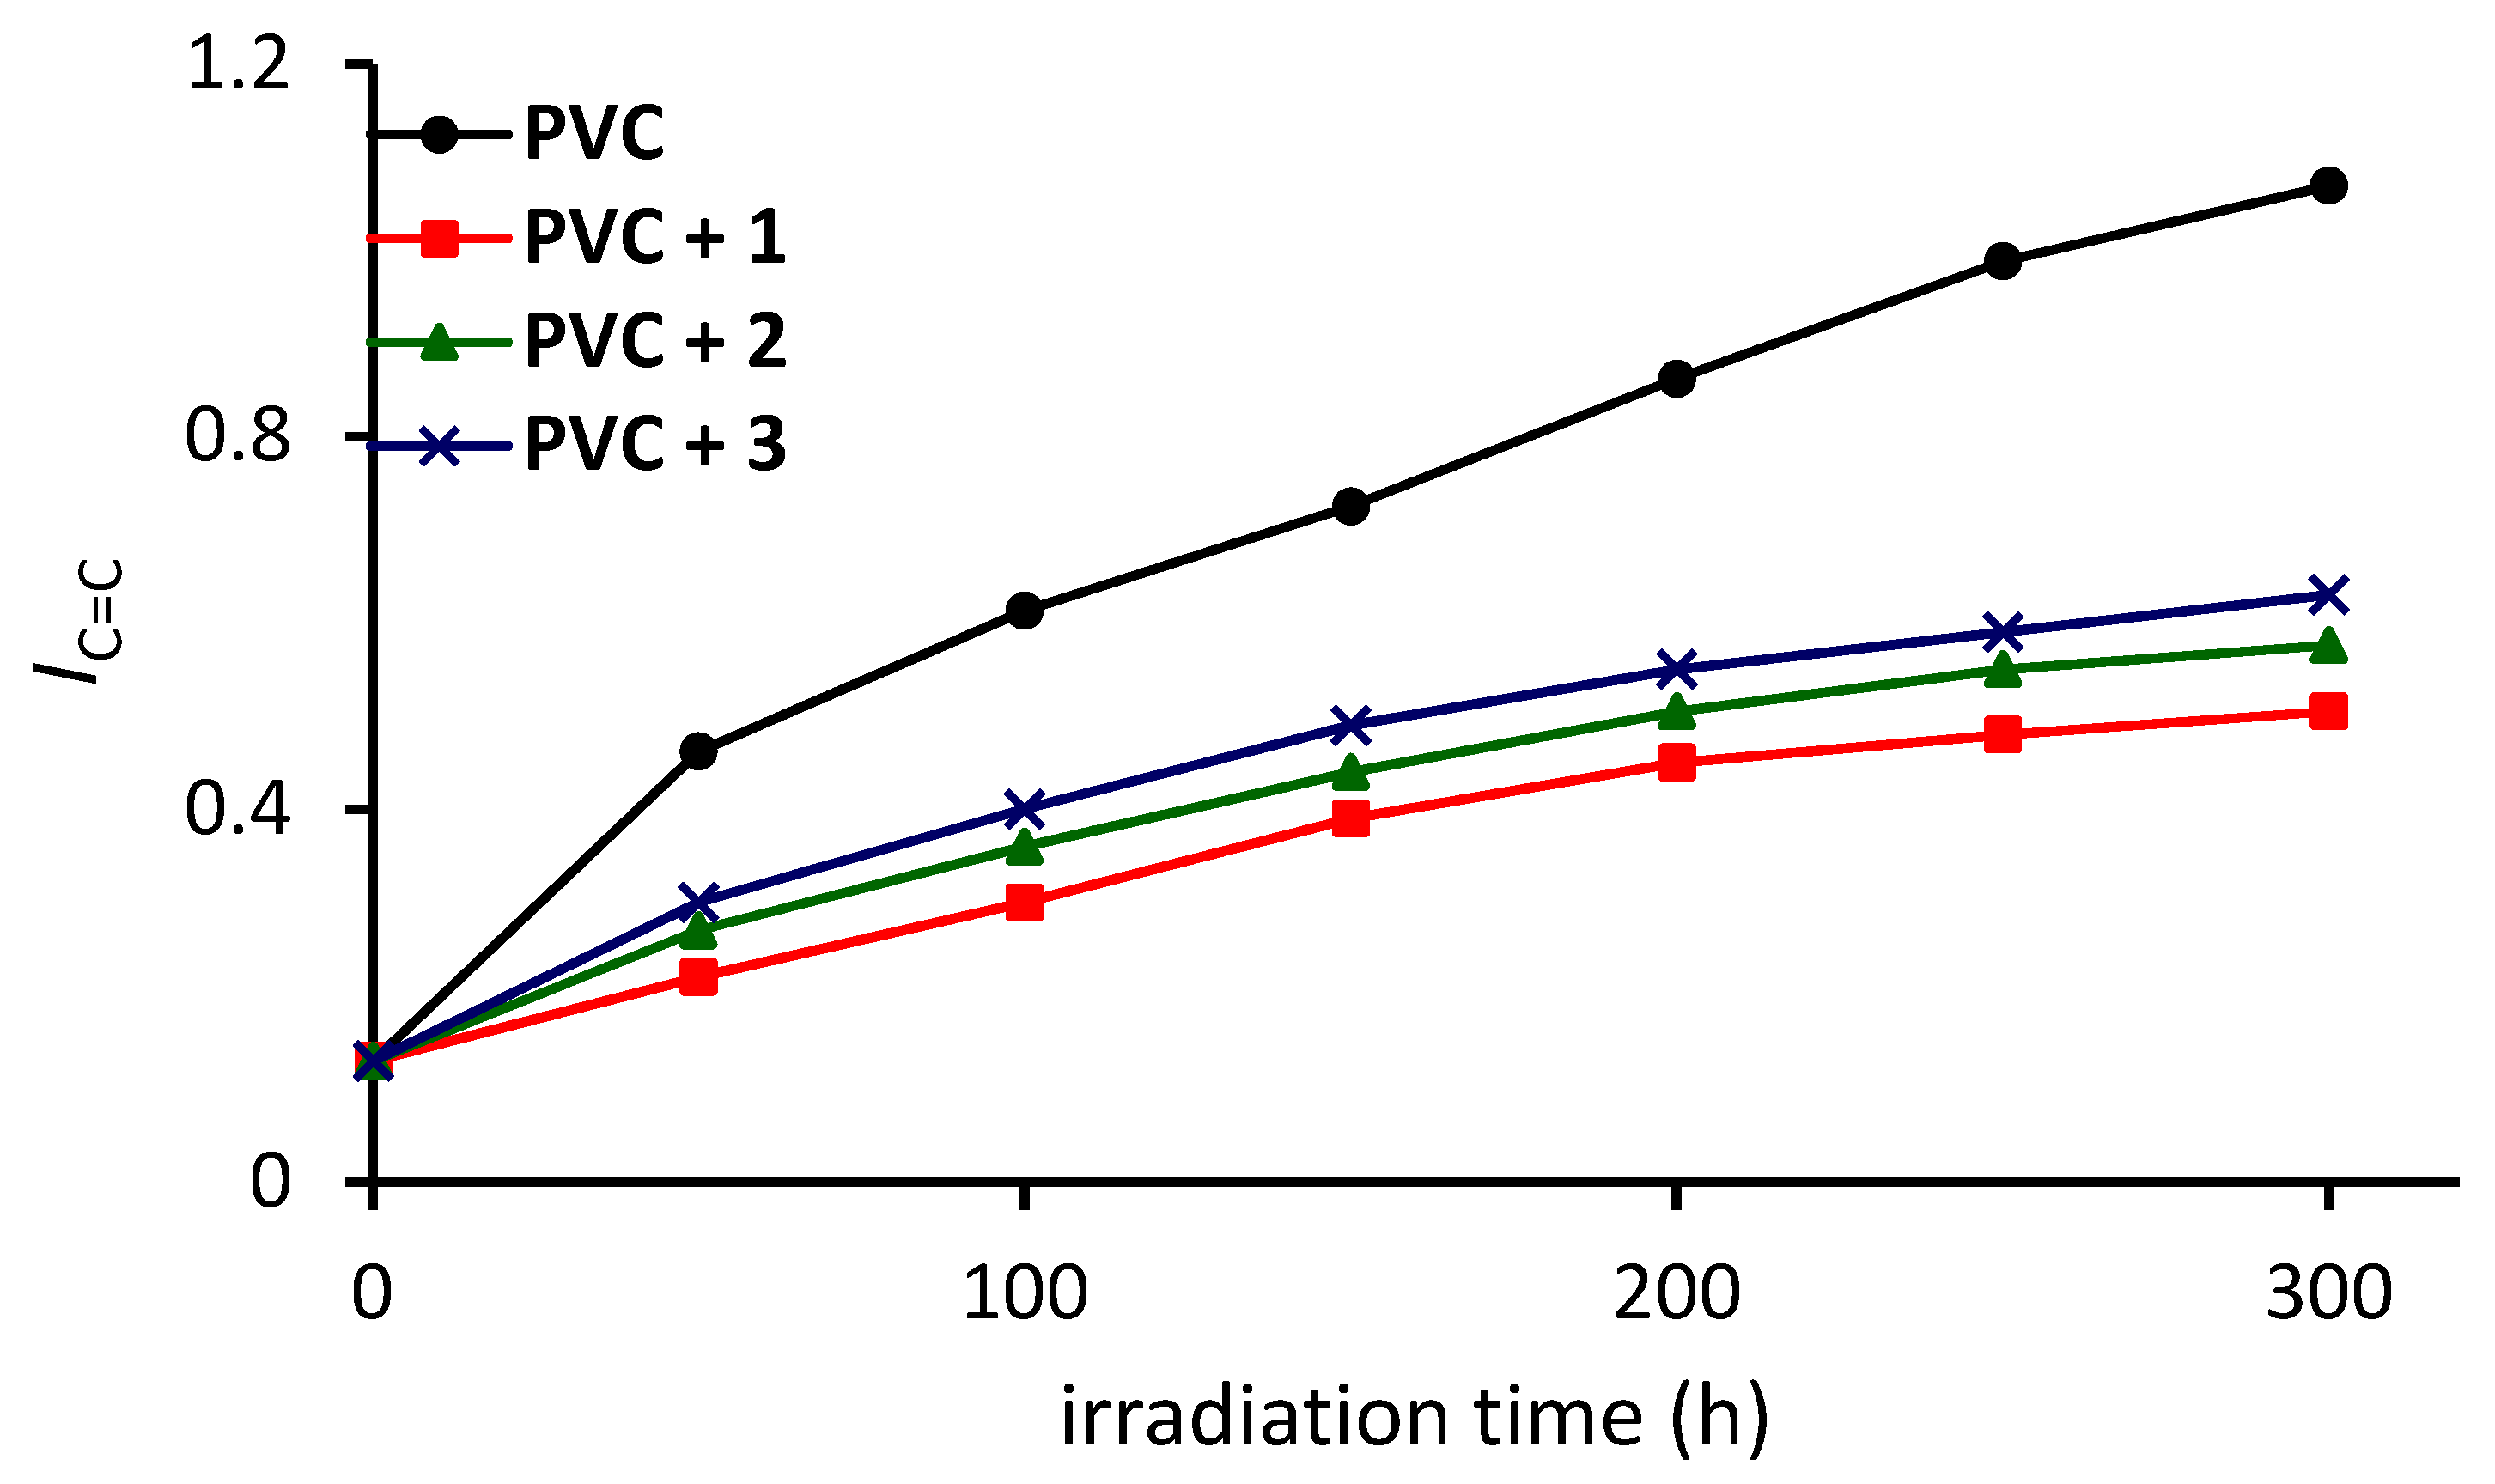 Espectros FTIR dos polímeros epoxídicos. DGEG/3DCM ( _____ ), DGEG